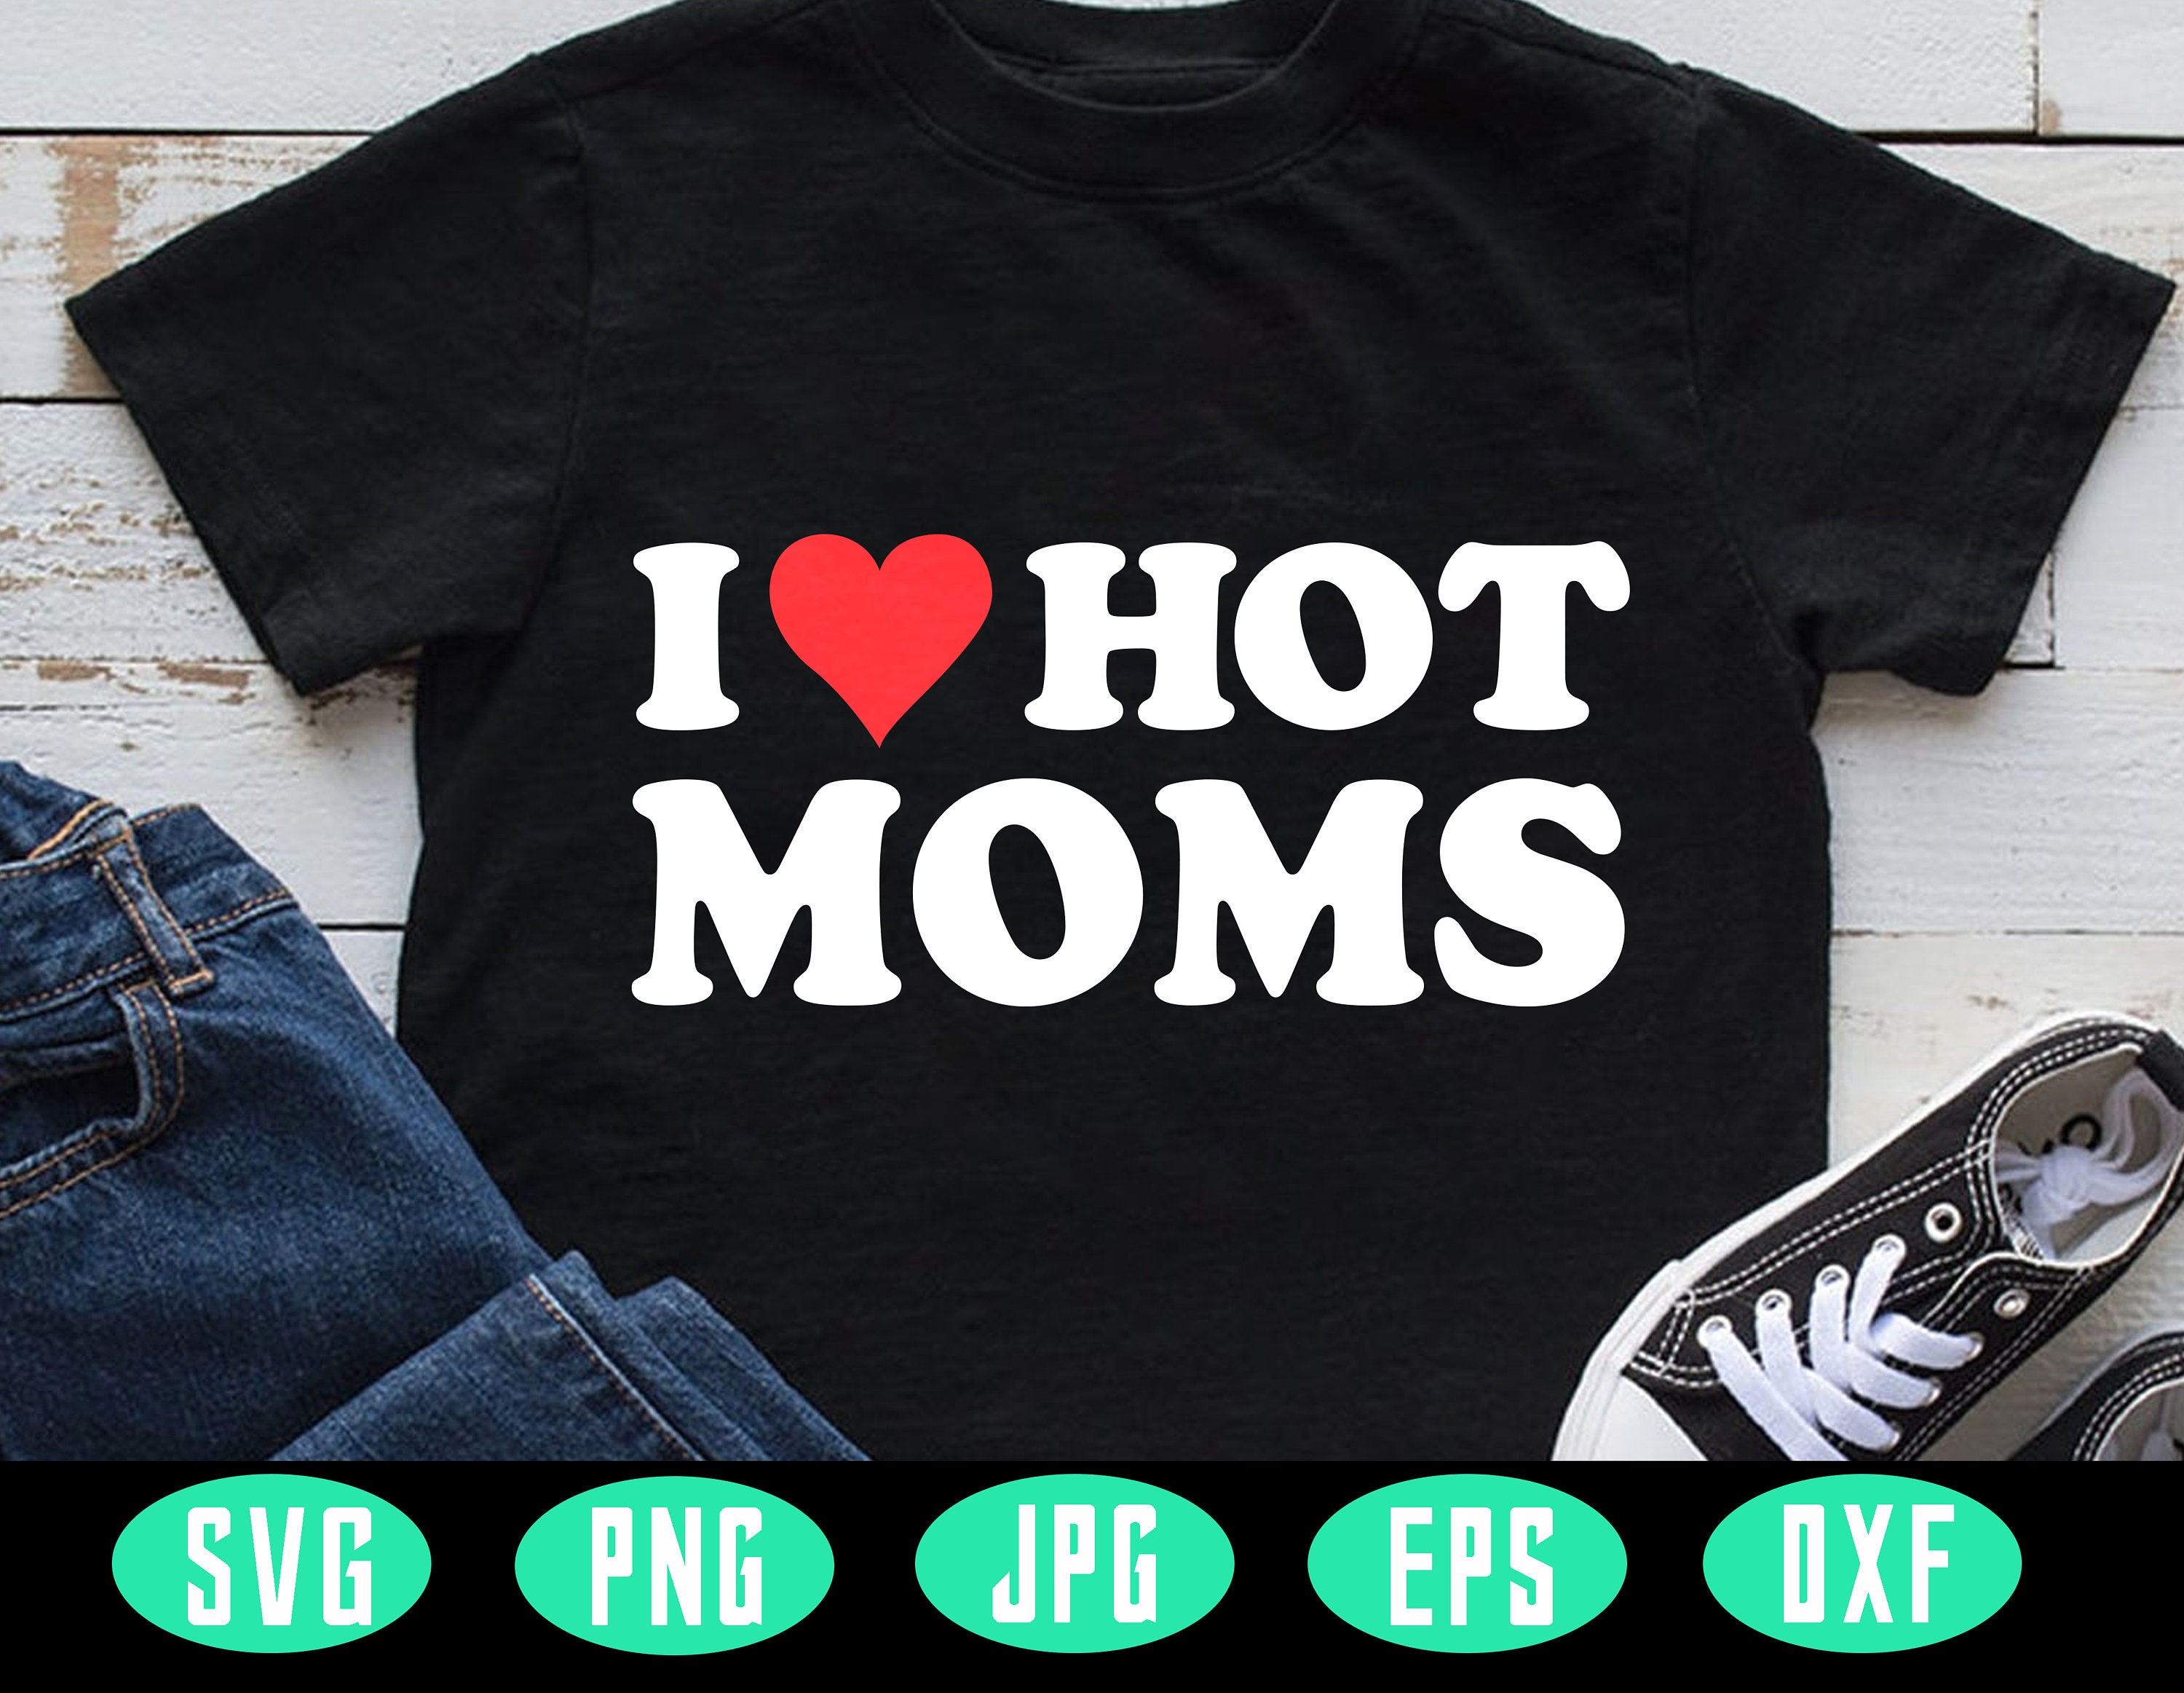 I Love Hot Moms Svg Funny Red Heart Love Moms Svg Love Moms Etsy